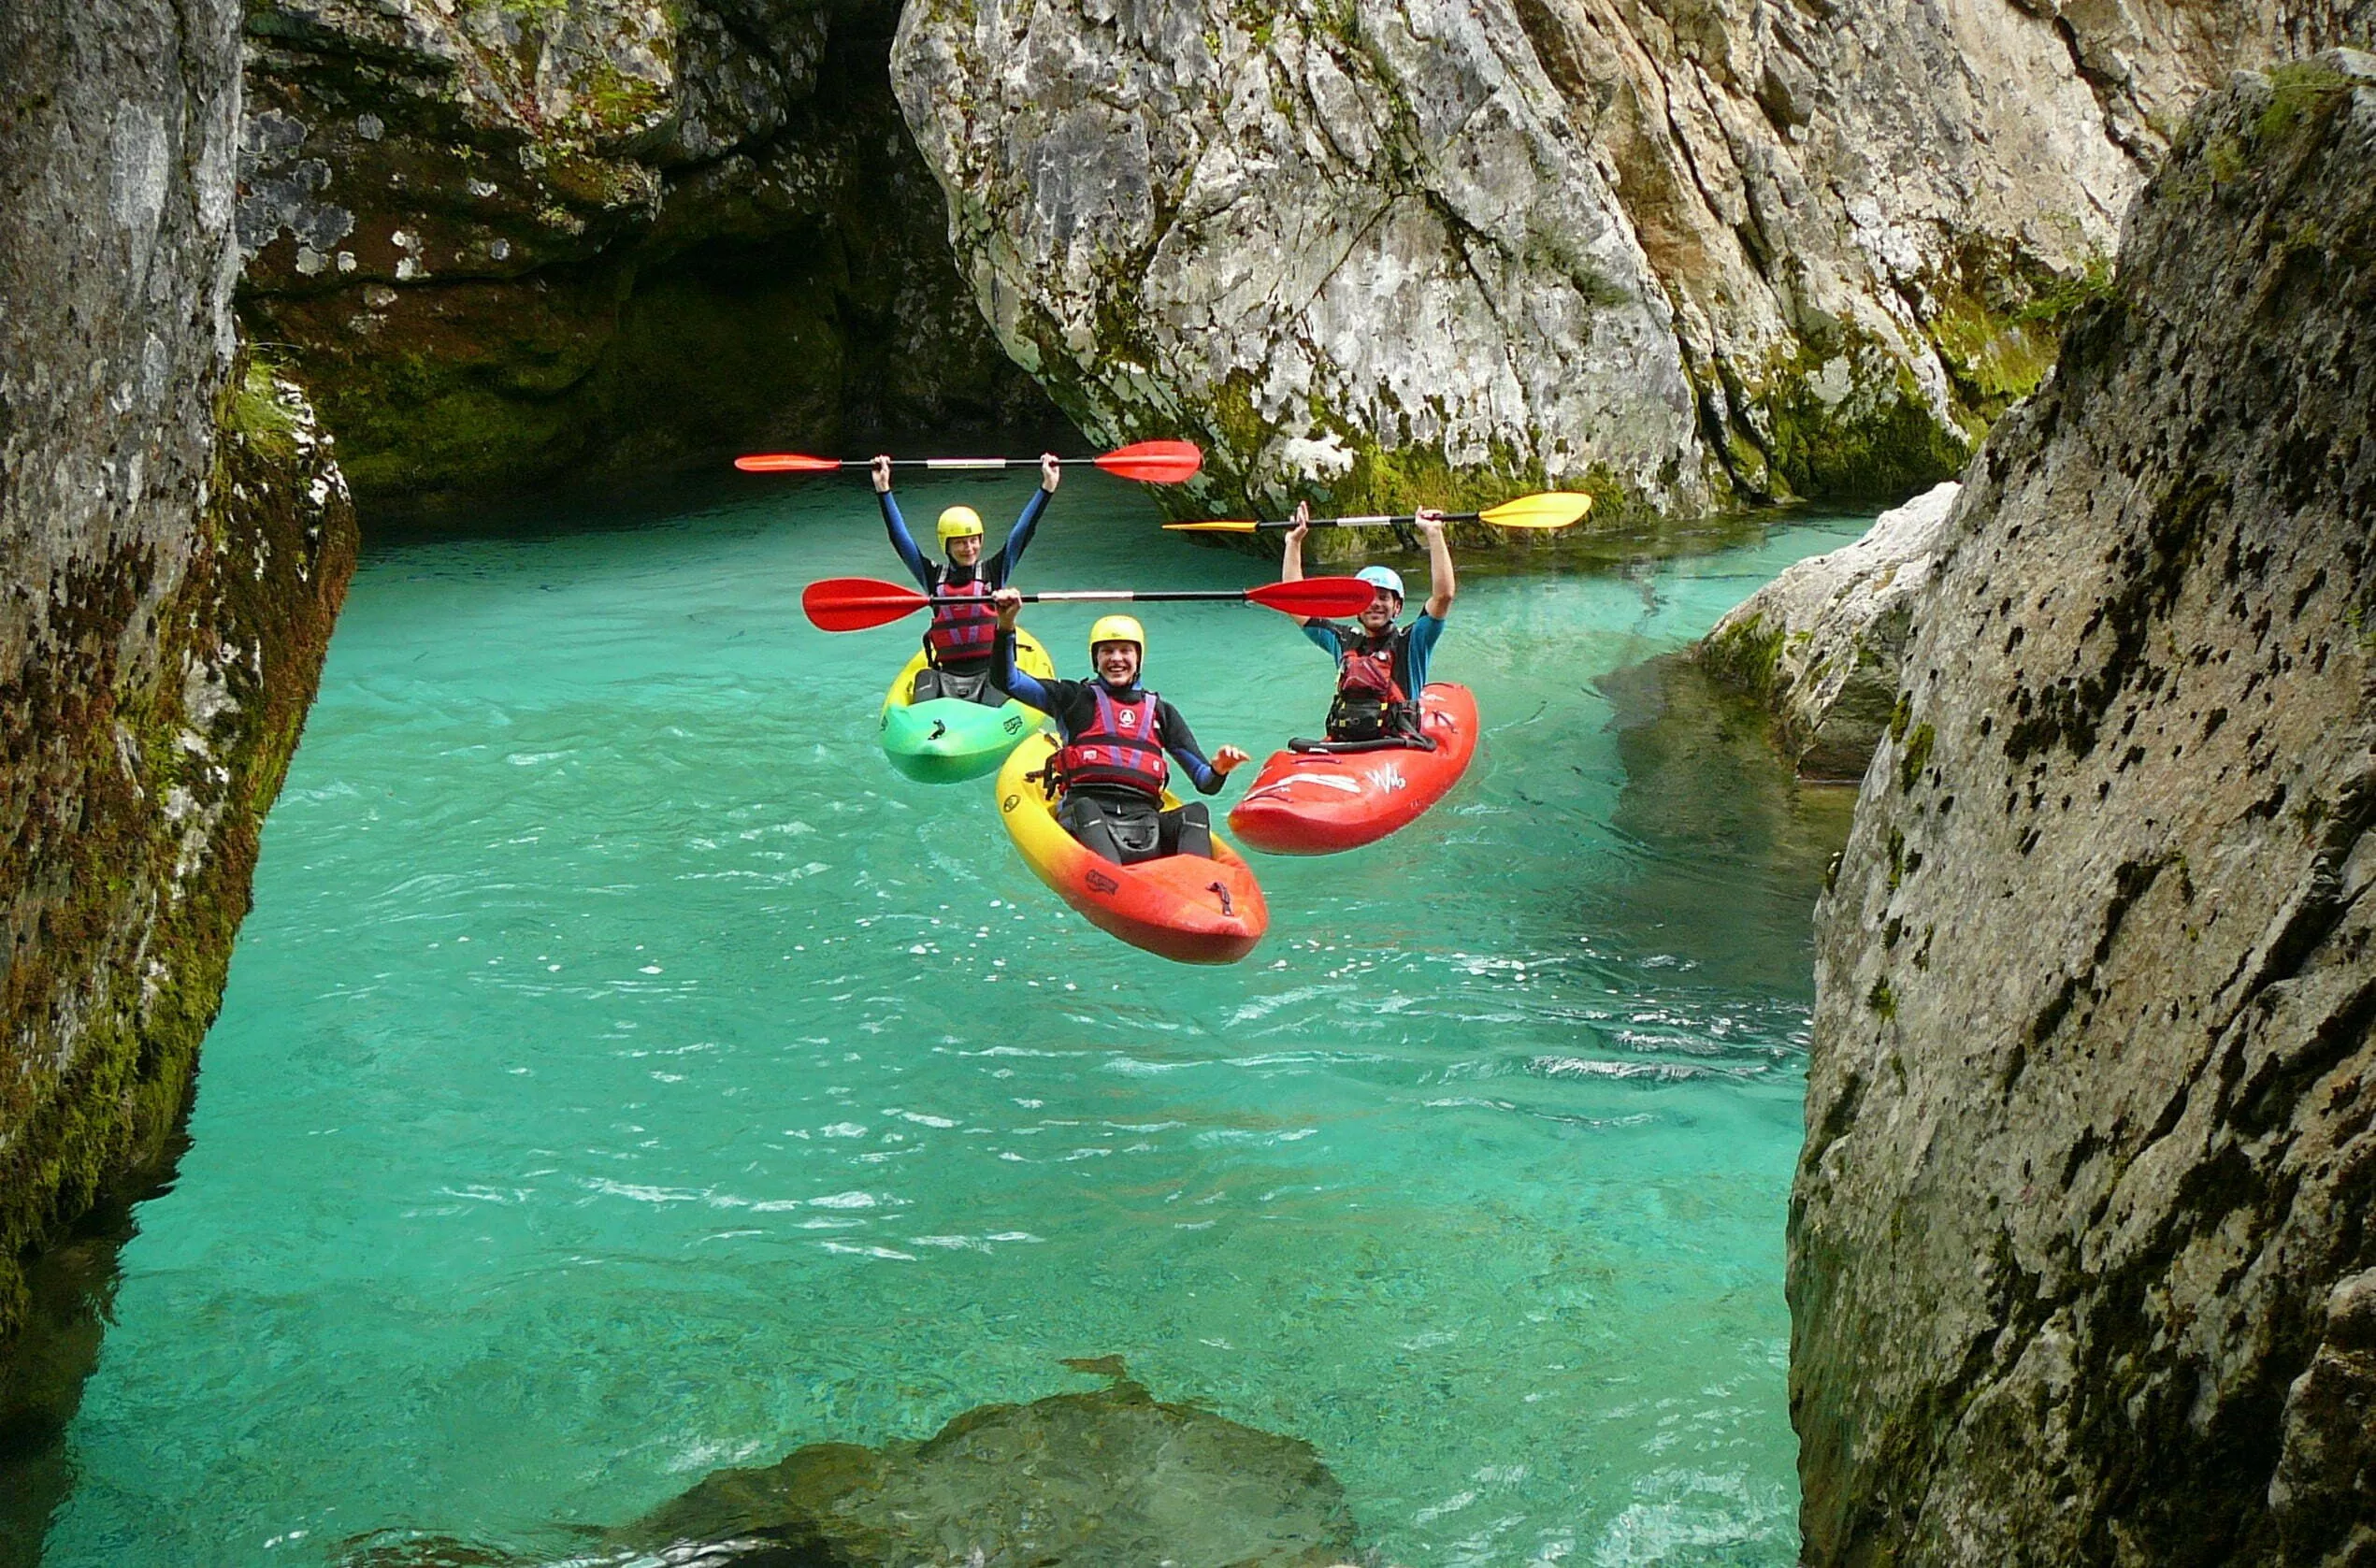 Kajak Soca in Slovenia, Europe | Kayaking & Canoeing - Rated 1